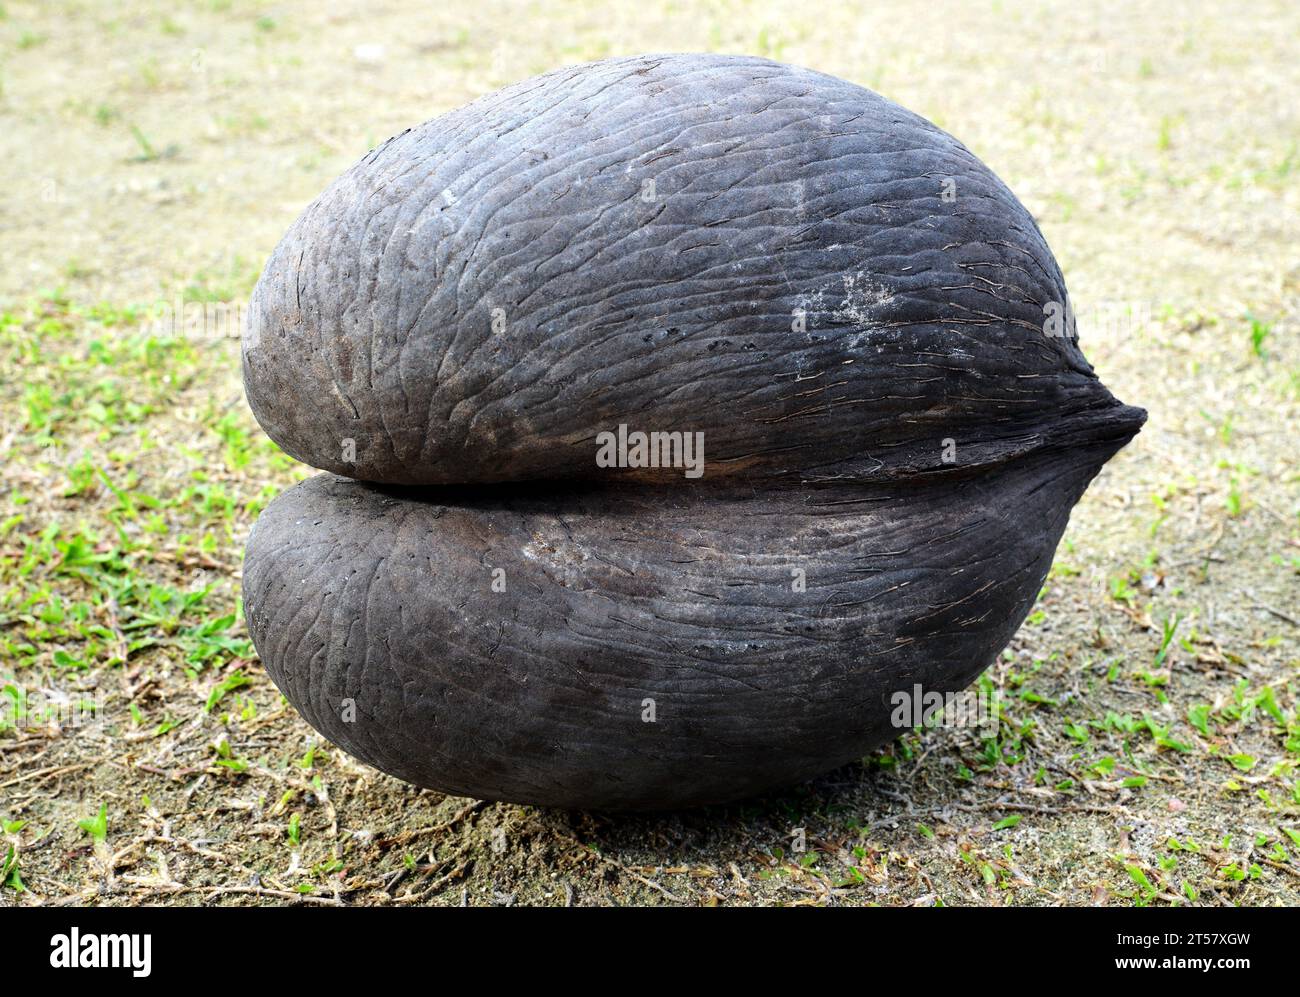 Coco de mer, coconut (Lodoicea maldivica) grows only in the Praslin island, Seychelles. Stock Photo